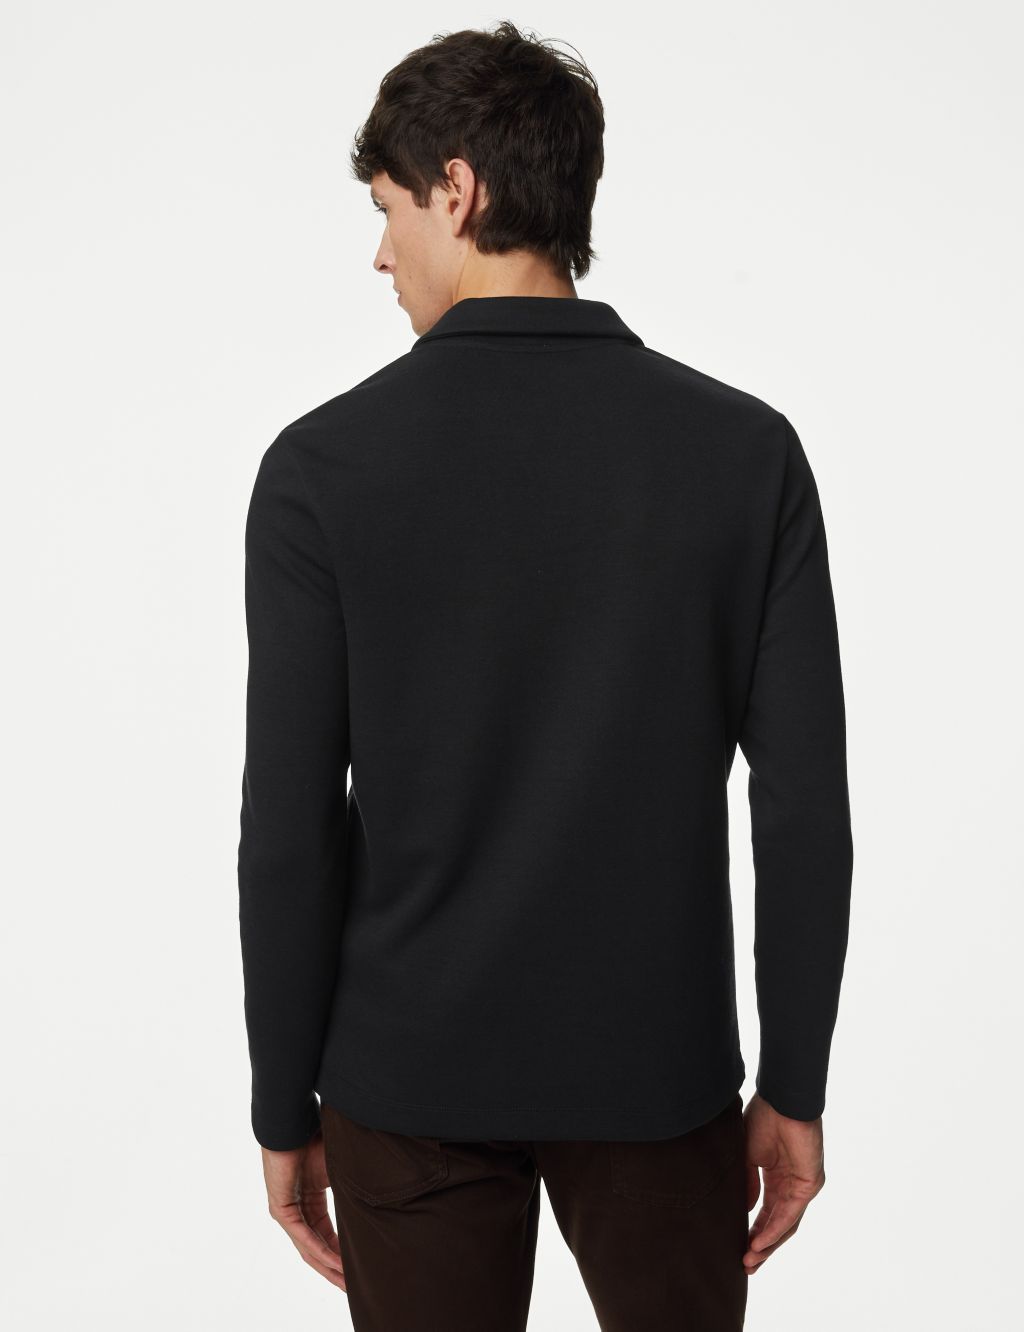 Cotton Blend Long Sleeve Sweatshirt image 4